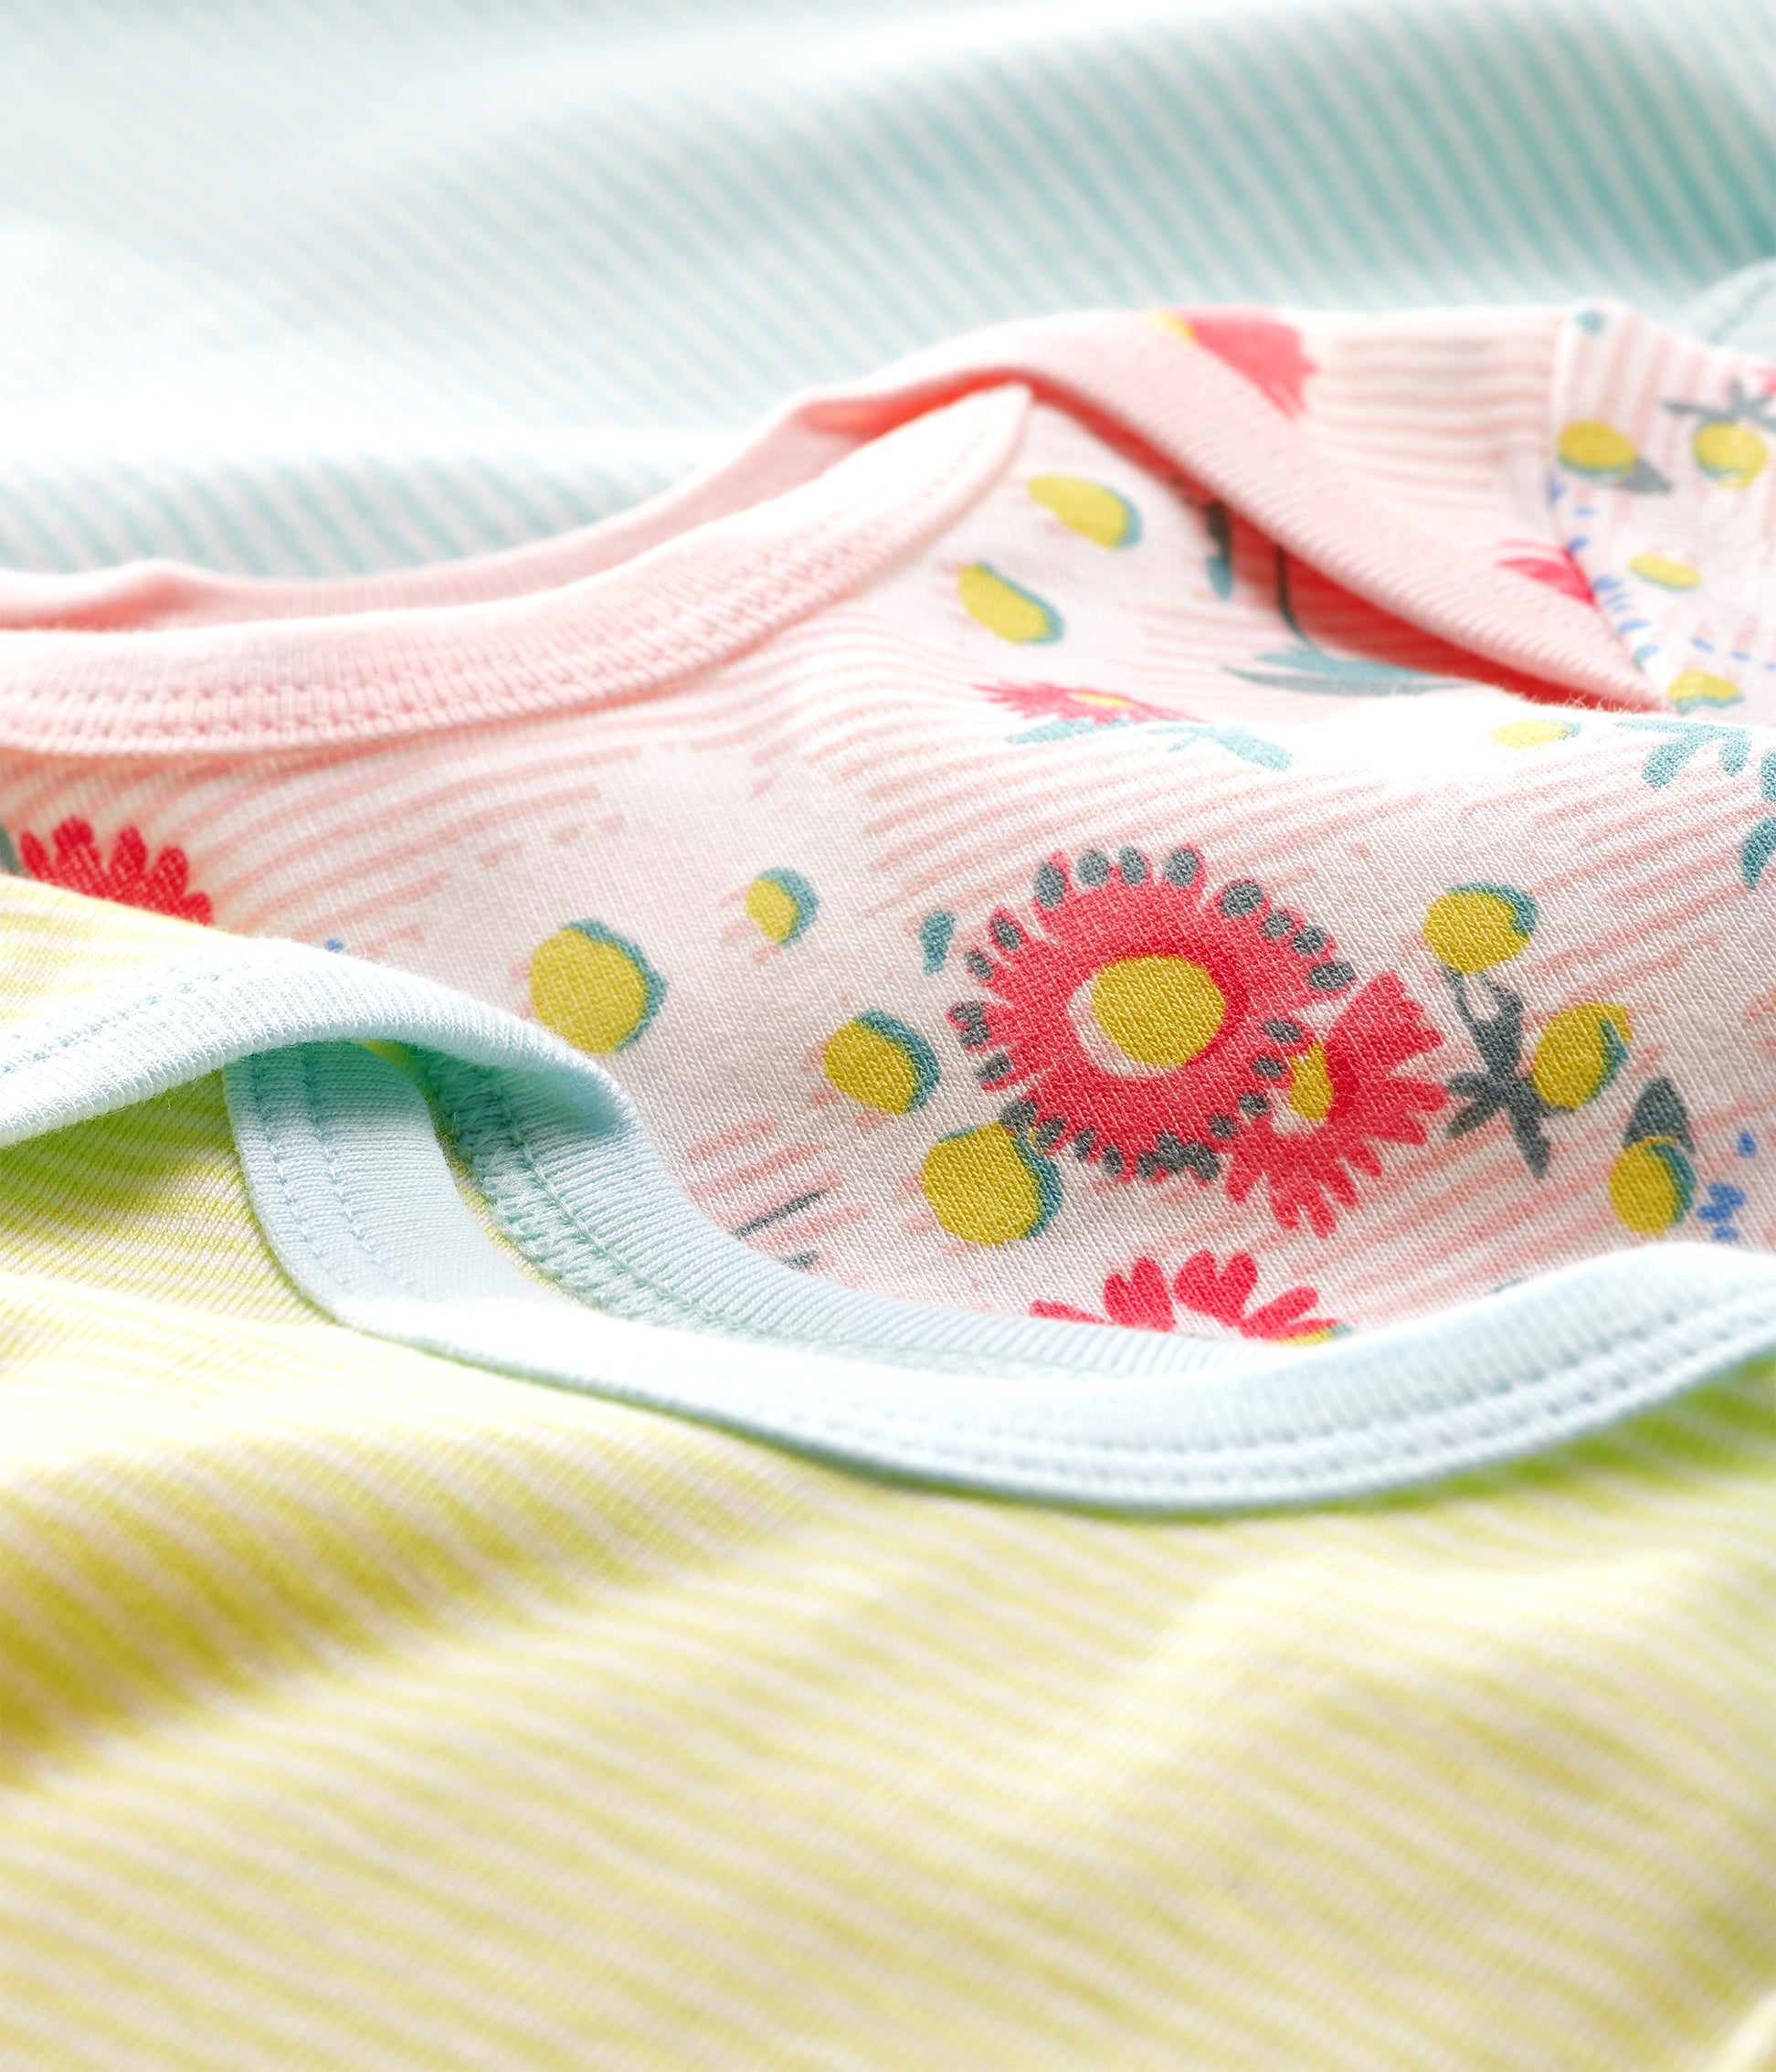 Baby Girls Multicolor Cotton Babysuit Set (3 Pack)